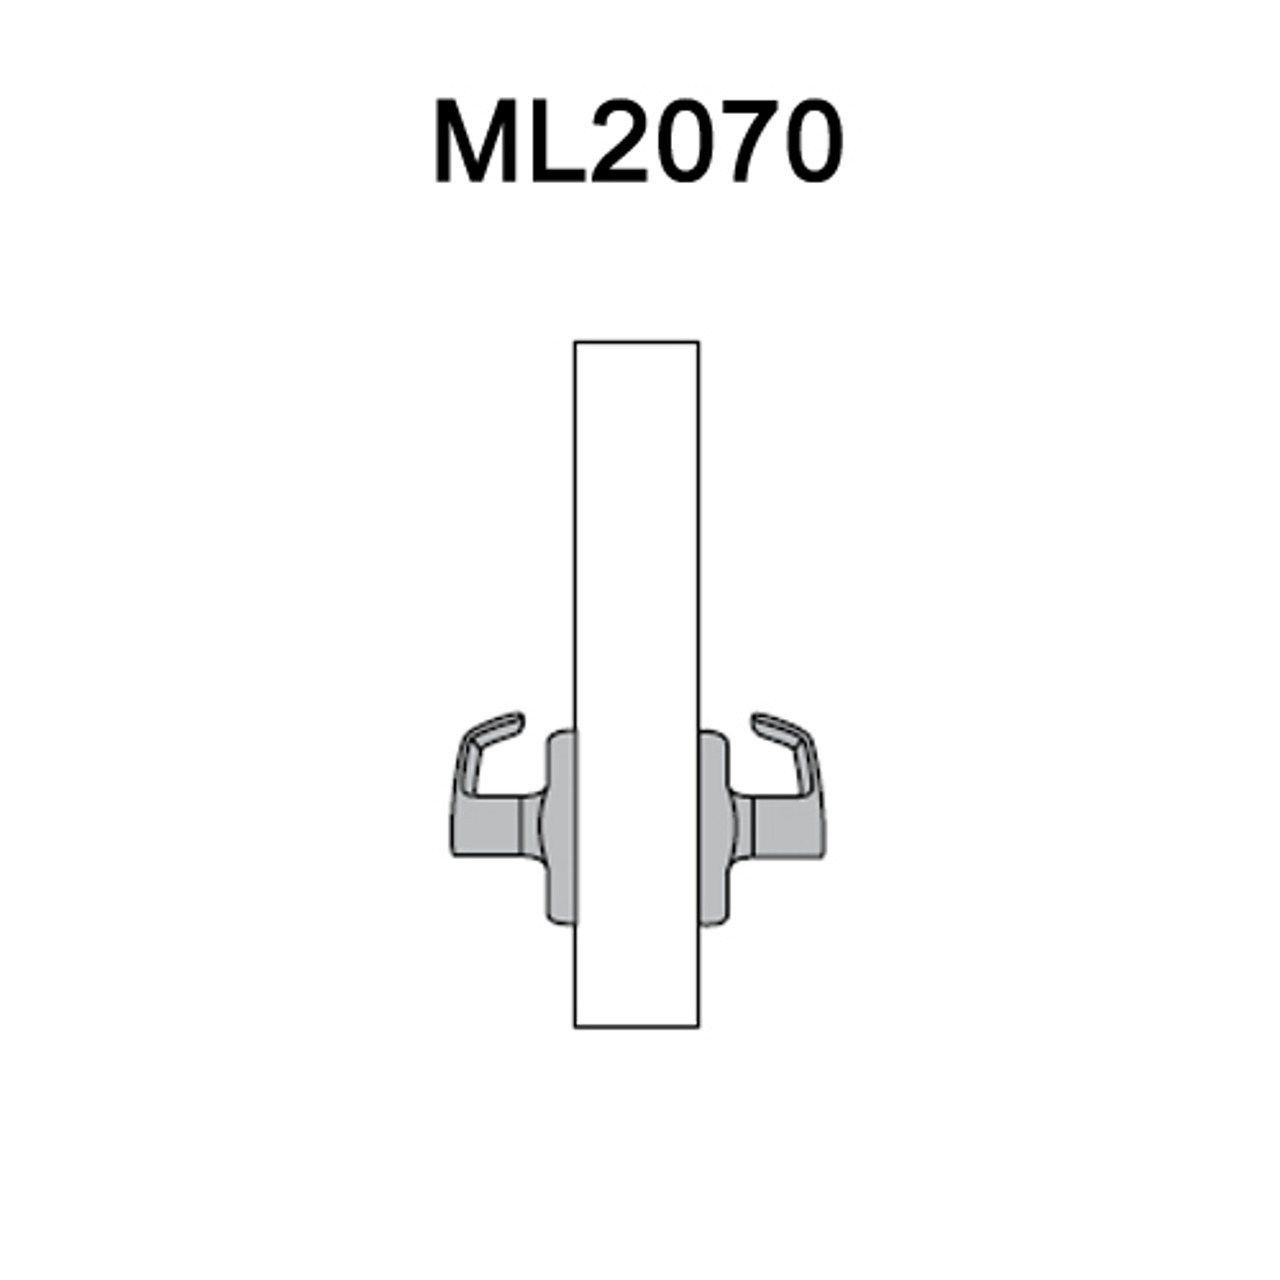 ML2070-RWM-629 Corbin Russwin ML2000 Series Mortise Full Dummy Locksets with Regis Lever in Bright Stainless Steel